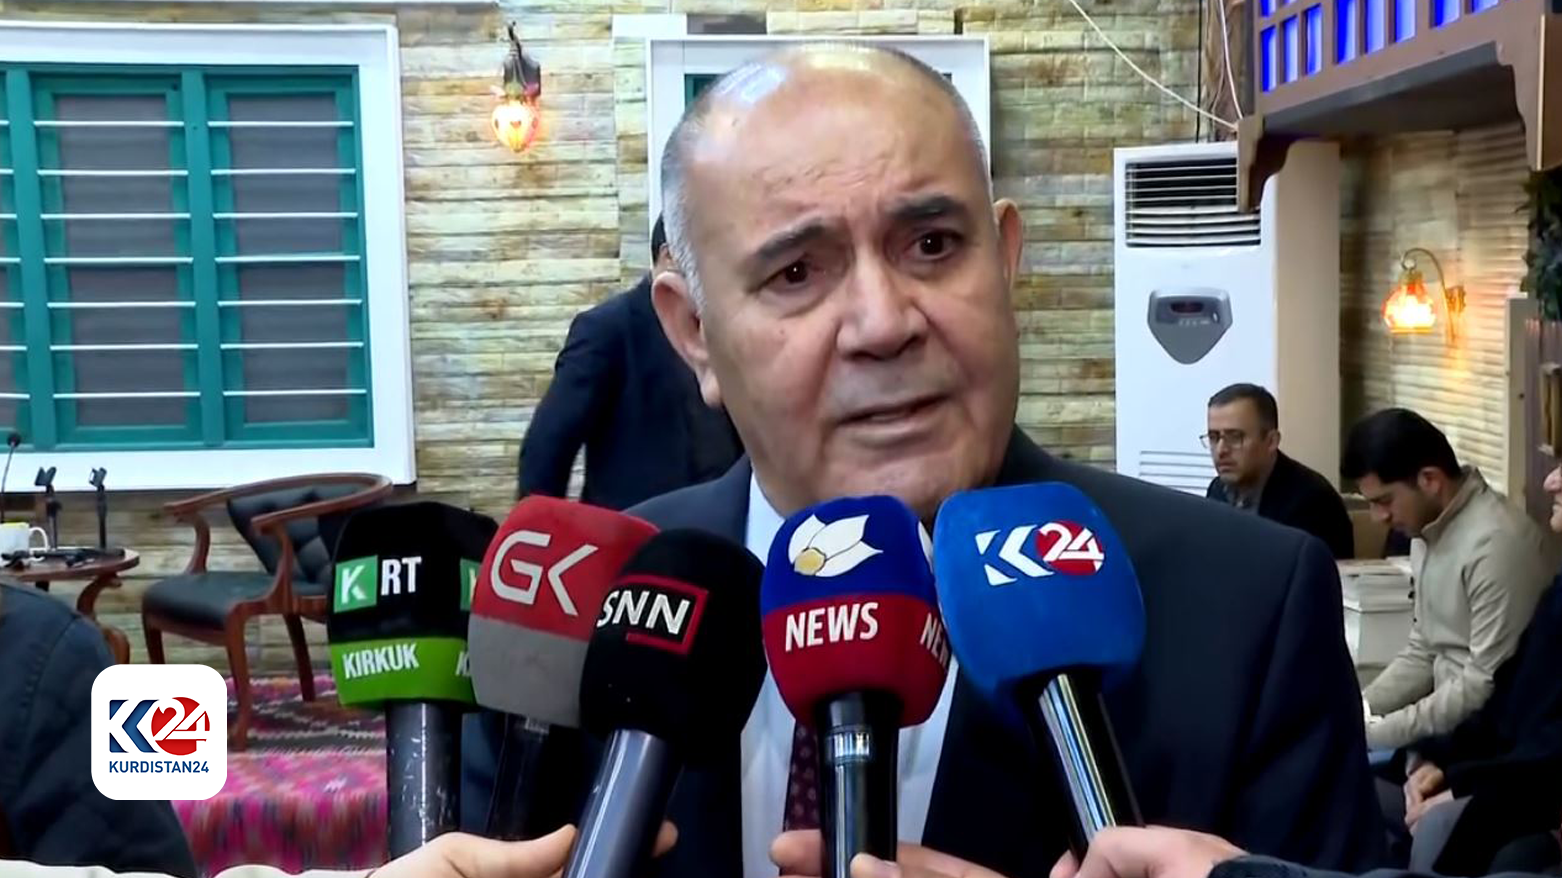 KDP PUK agree to elect Kurdish governor for Kirkuk says PUK spokesperson